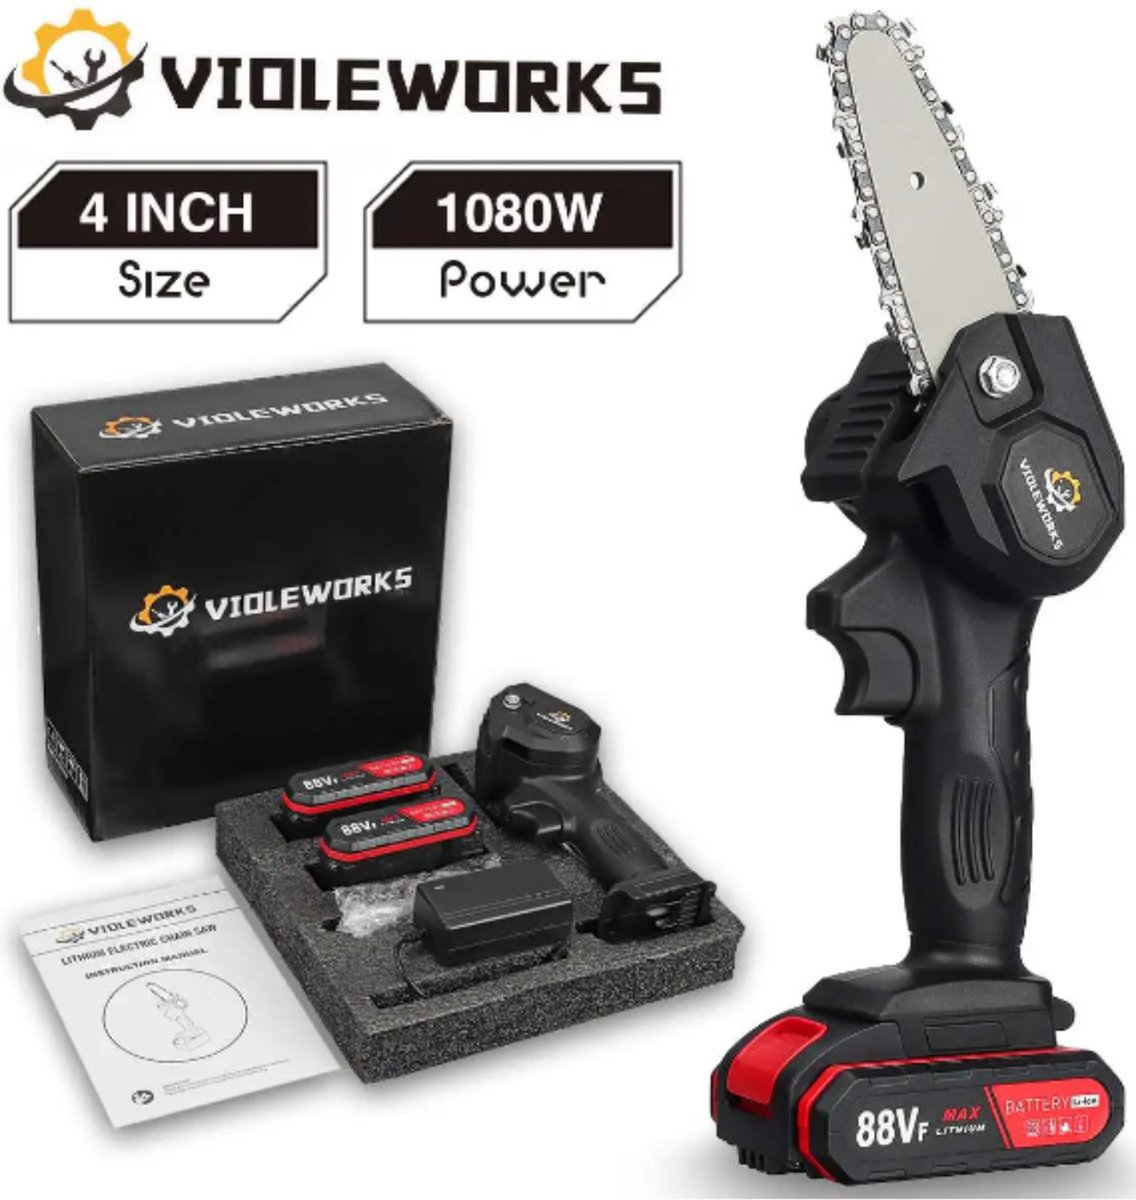 Violeworks® Accu Kettingzaag - Snoeizaag - Mini Kettingzaag - Handkettingzaag - Ook voor Makita - Elektrische Kettingzaag - Elektrische Snoeischaar - Op Batterij - 2900 mAh - 1080W - 88V